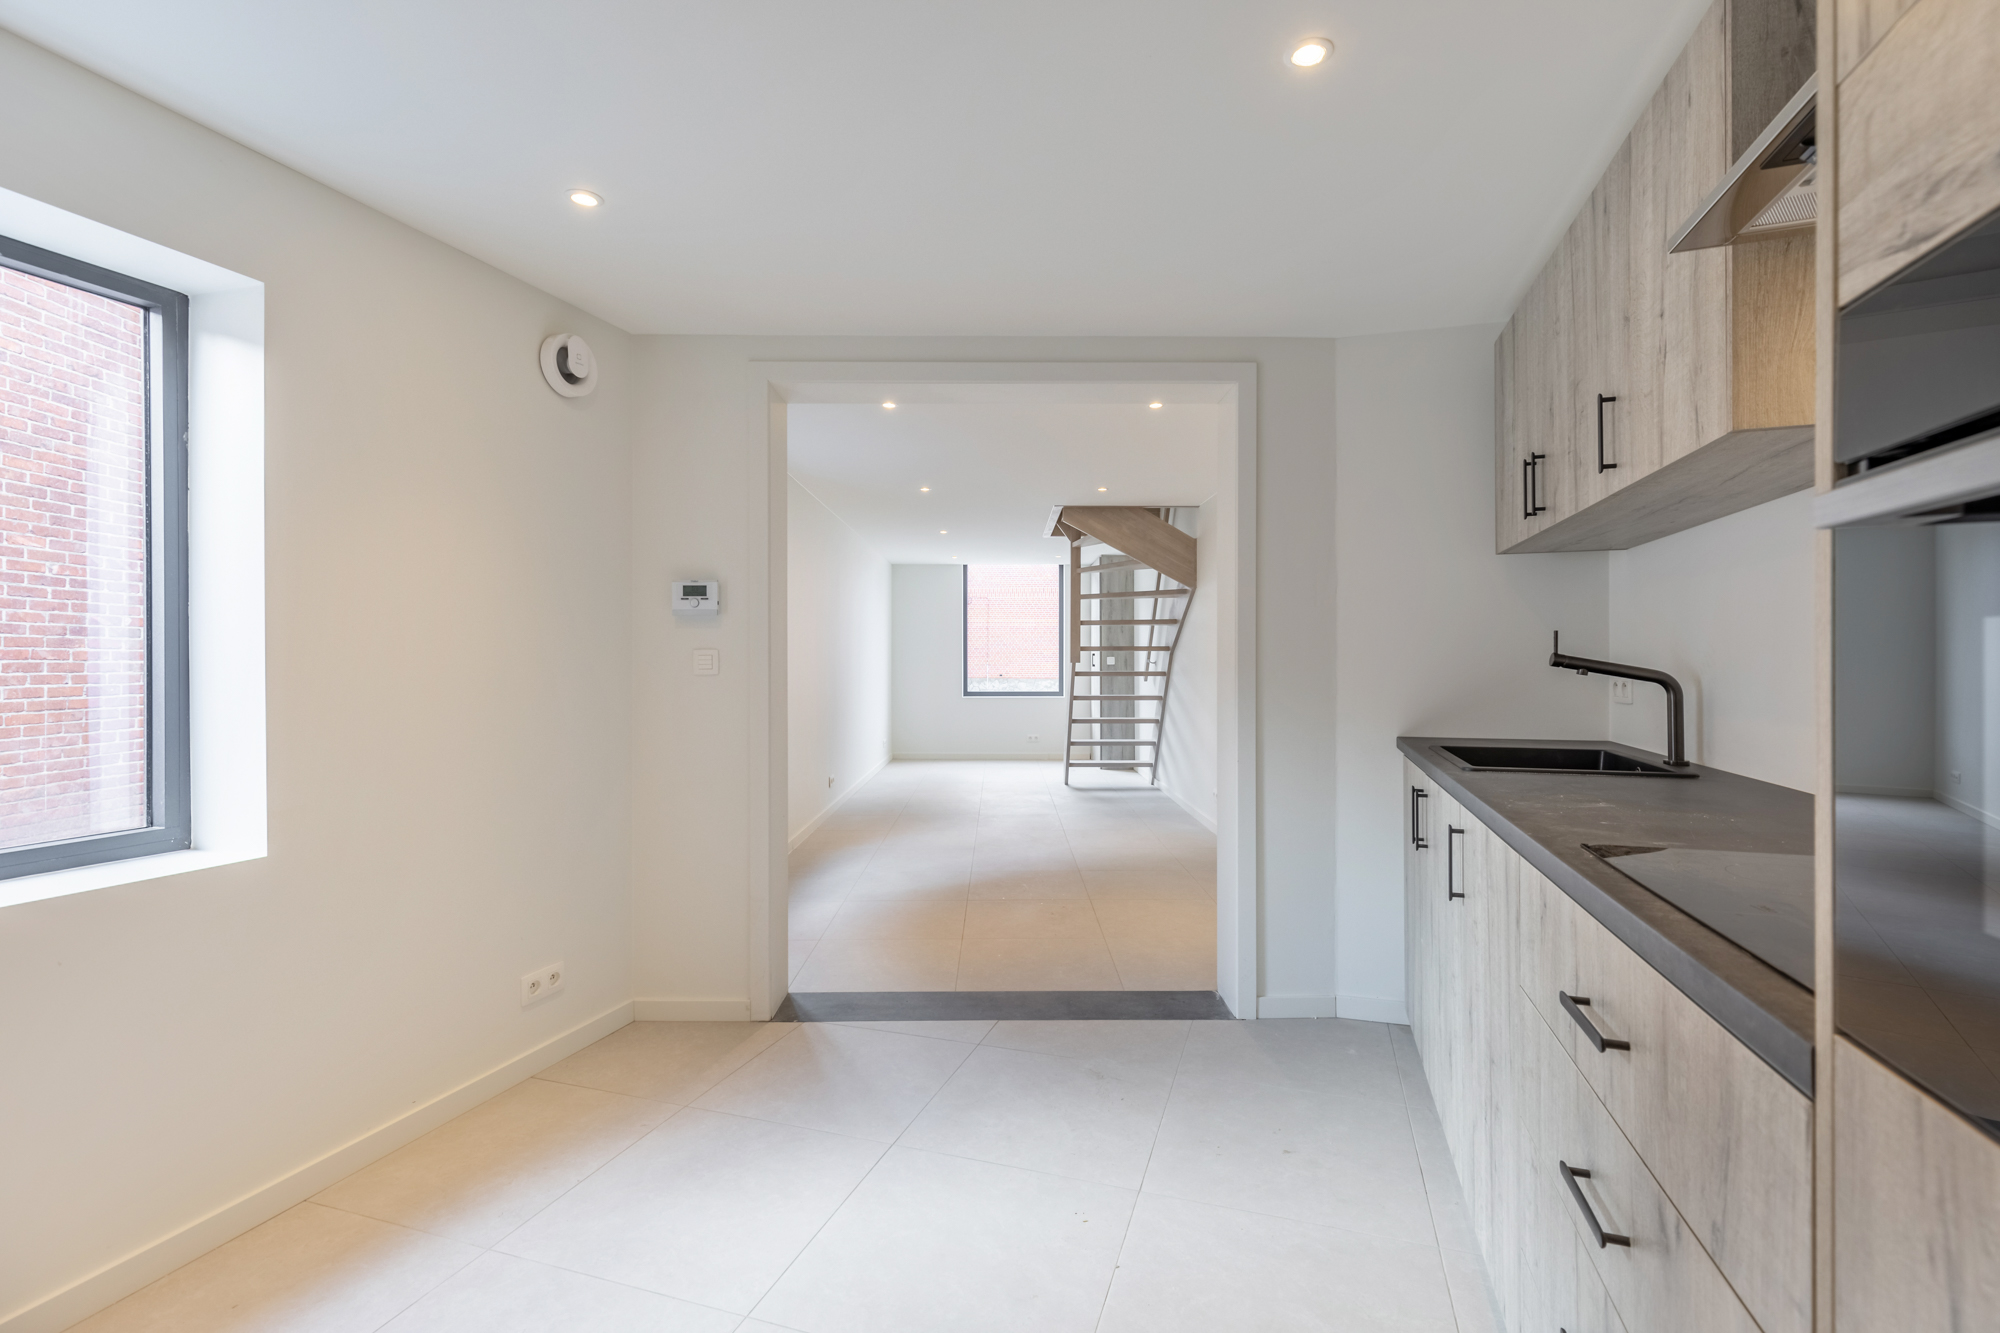 IDEALIS VASTGOED – Charmante en volledig gerenoveerde woning met een gezellige leefruimte, uitgeruste keuken, knappe slaapkamer én ruime badkamer! foto 6